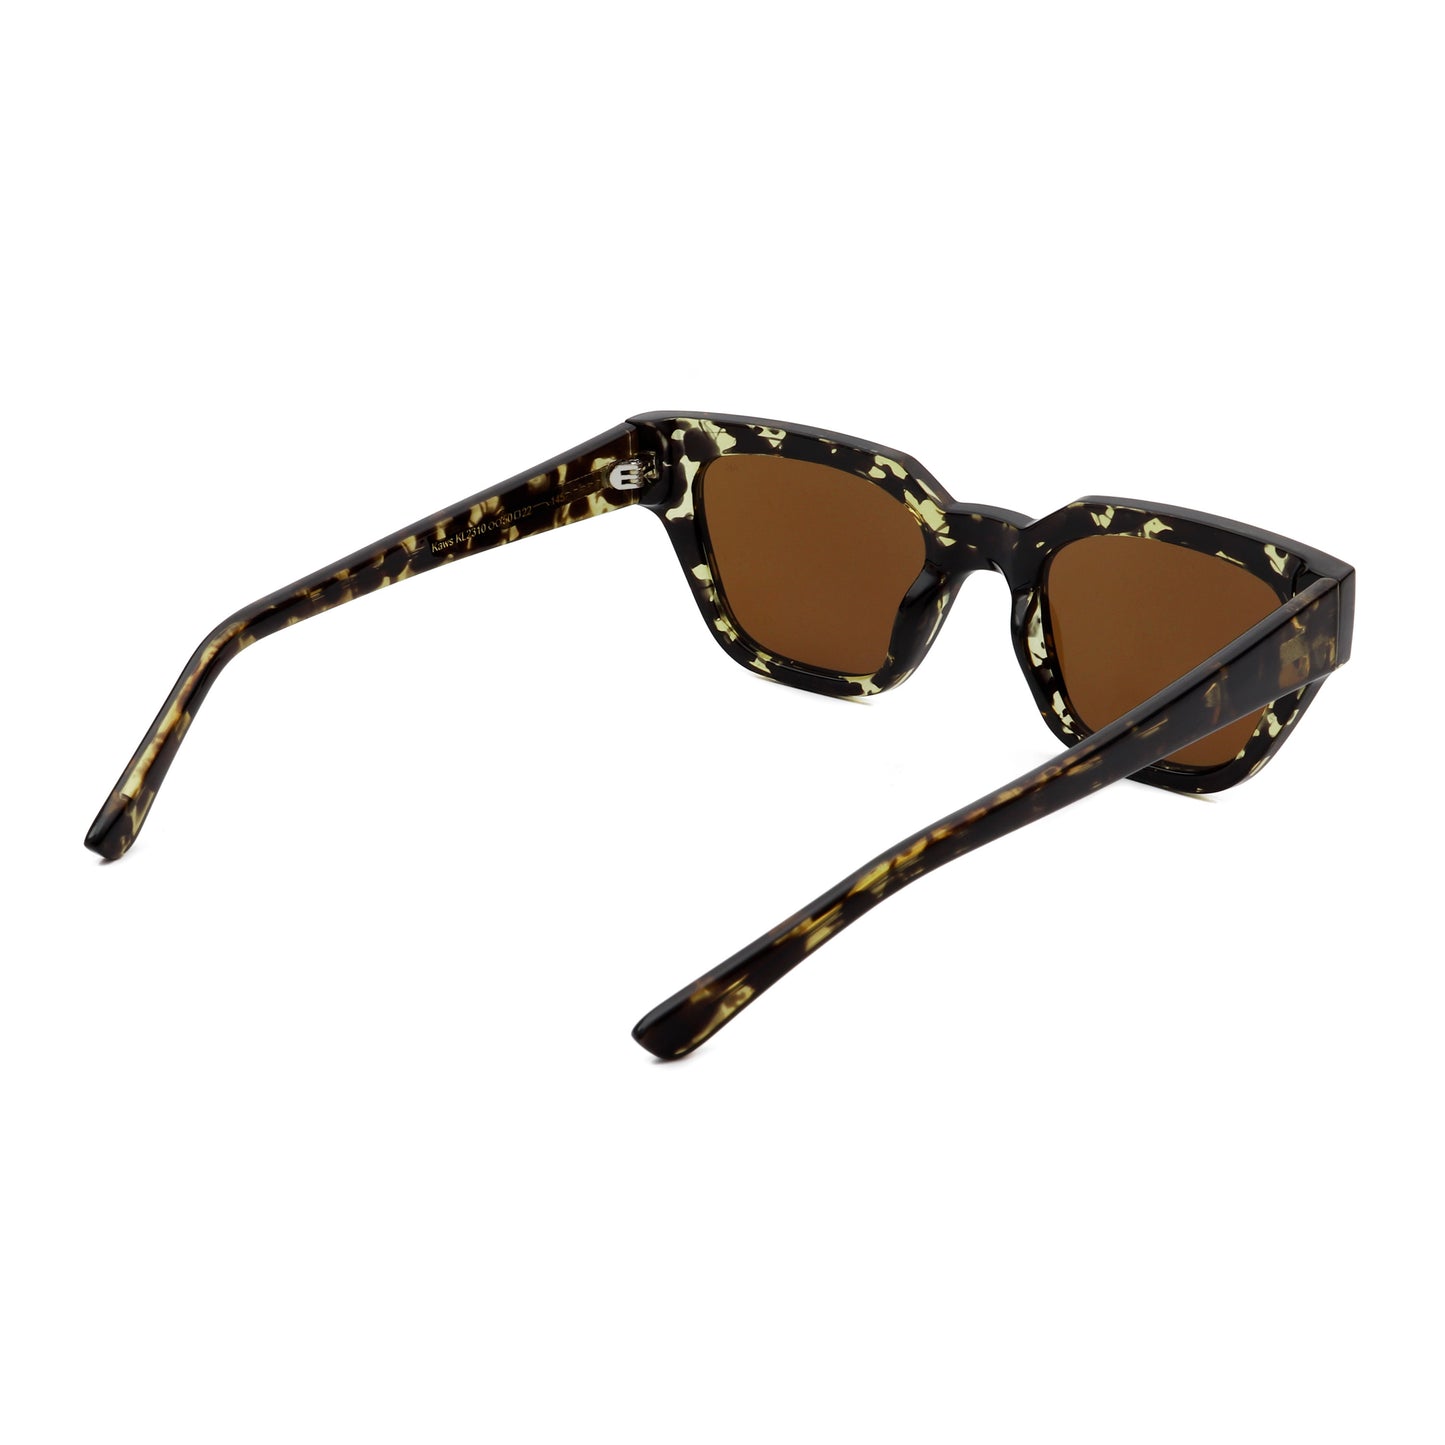 A.Kjaerbede Kaws Sunglasses in Black & Yellow Tortoise color